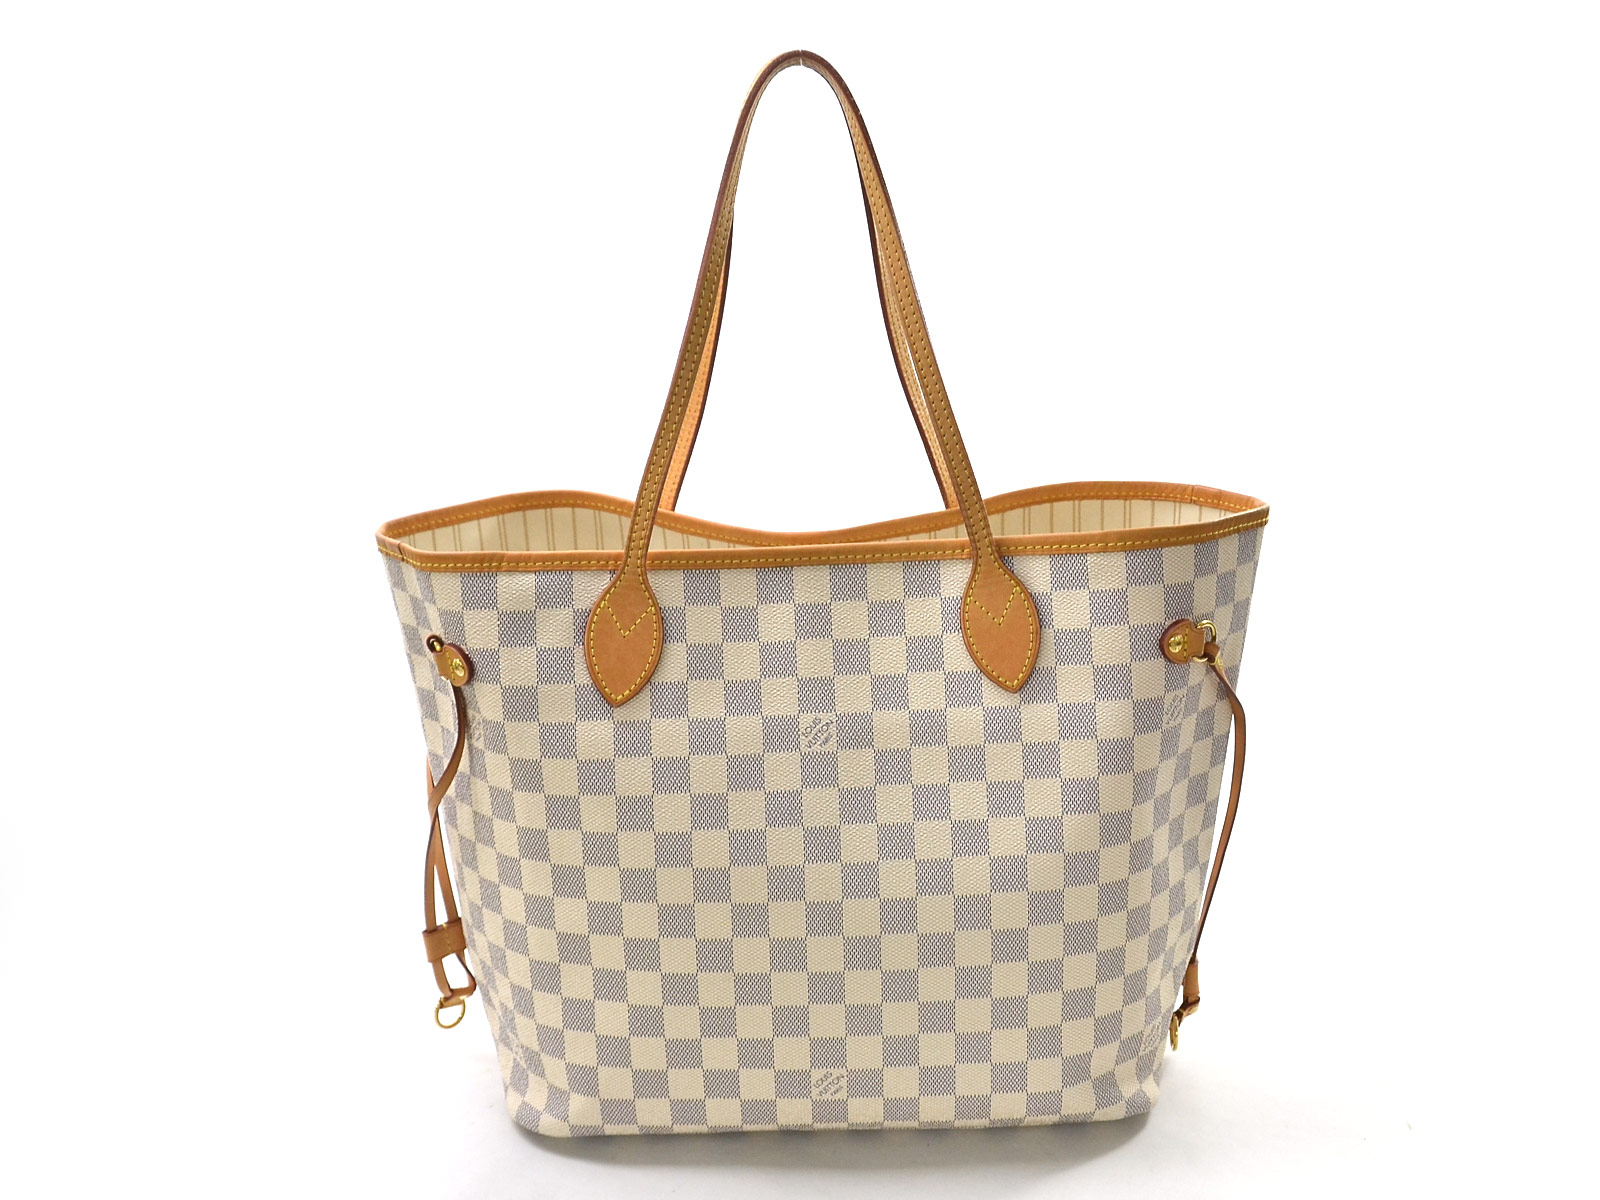 Auth Louis Vuitton Damier Azur Neverfull MM Shoulder Bag w/ Pouch USED - 92844 | eBay